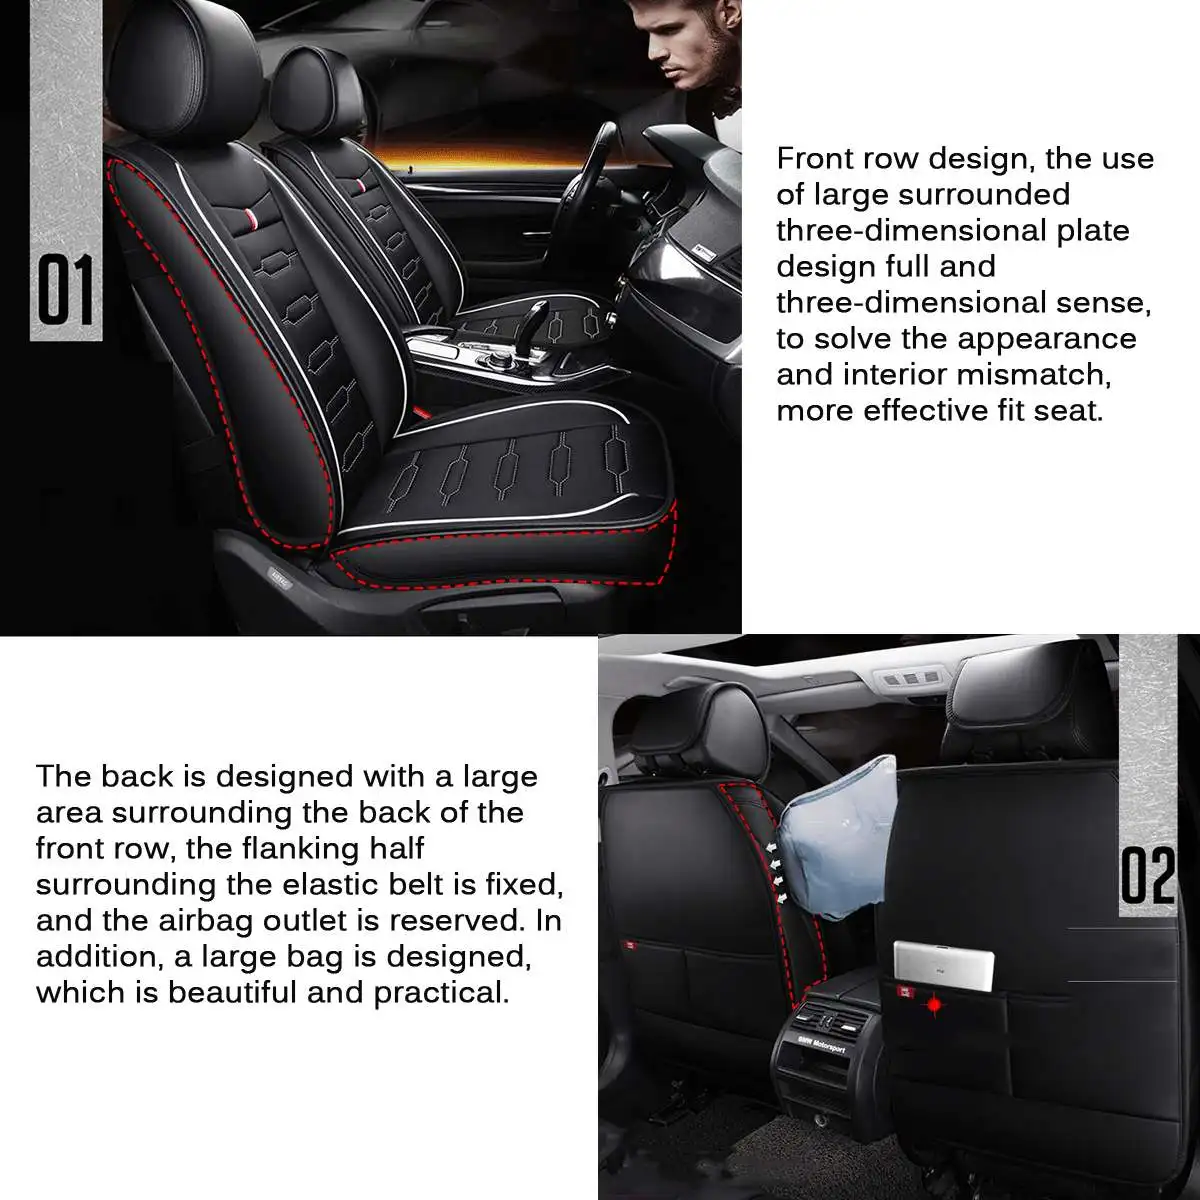 https://ae01.alicdn.com/kf/H244b4a1e8f394922b948da3da0f51f9dk/Car-Seat-Covers-Four-Seasons-Universal-Car-Seat-Cushion-Chair-Protector-Mats-Pad-Protection-Car-Interior.jpg